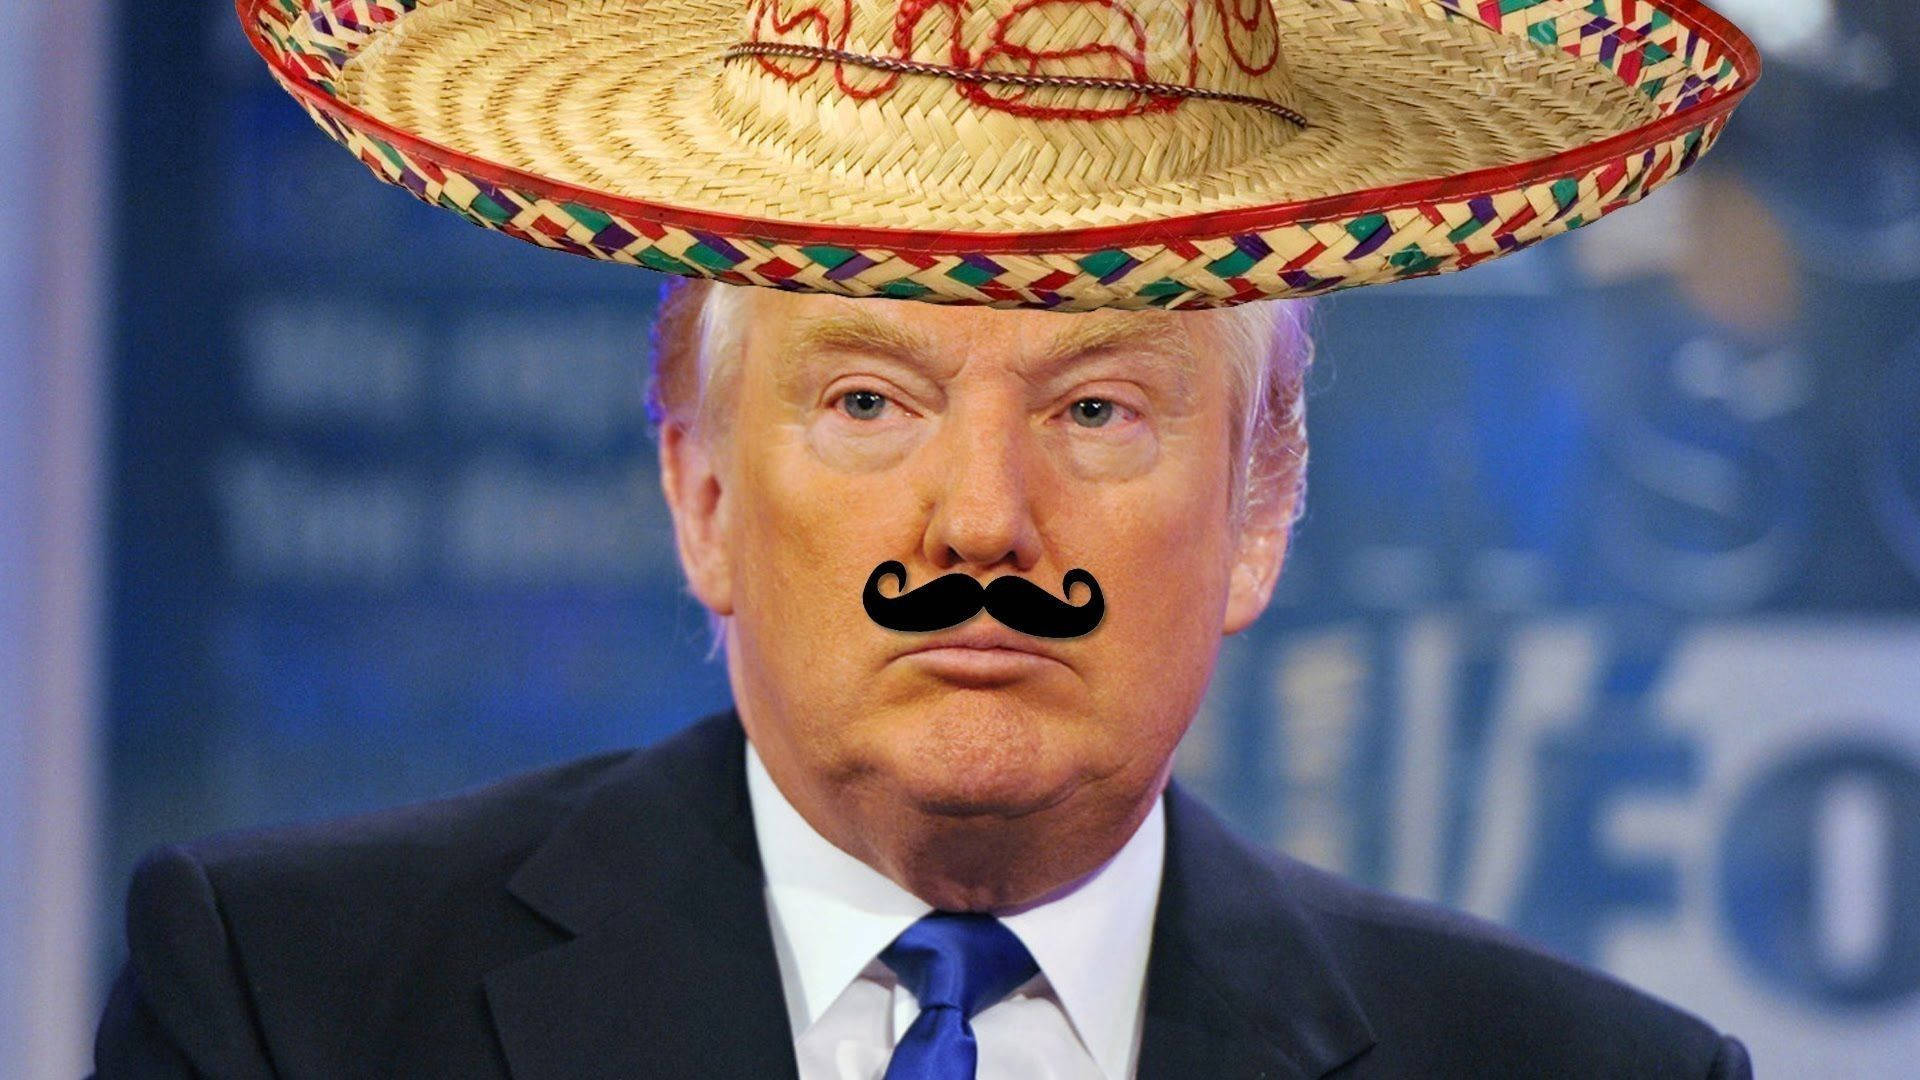 funny mexican sombrero meme